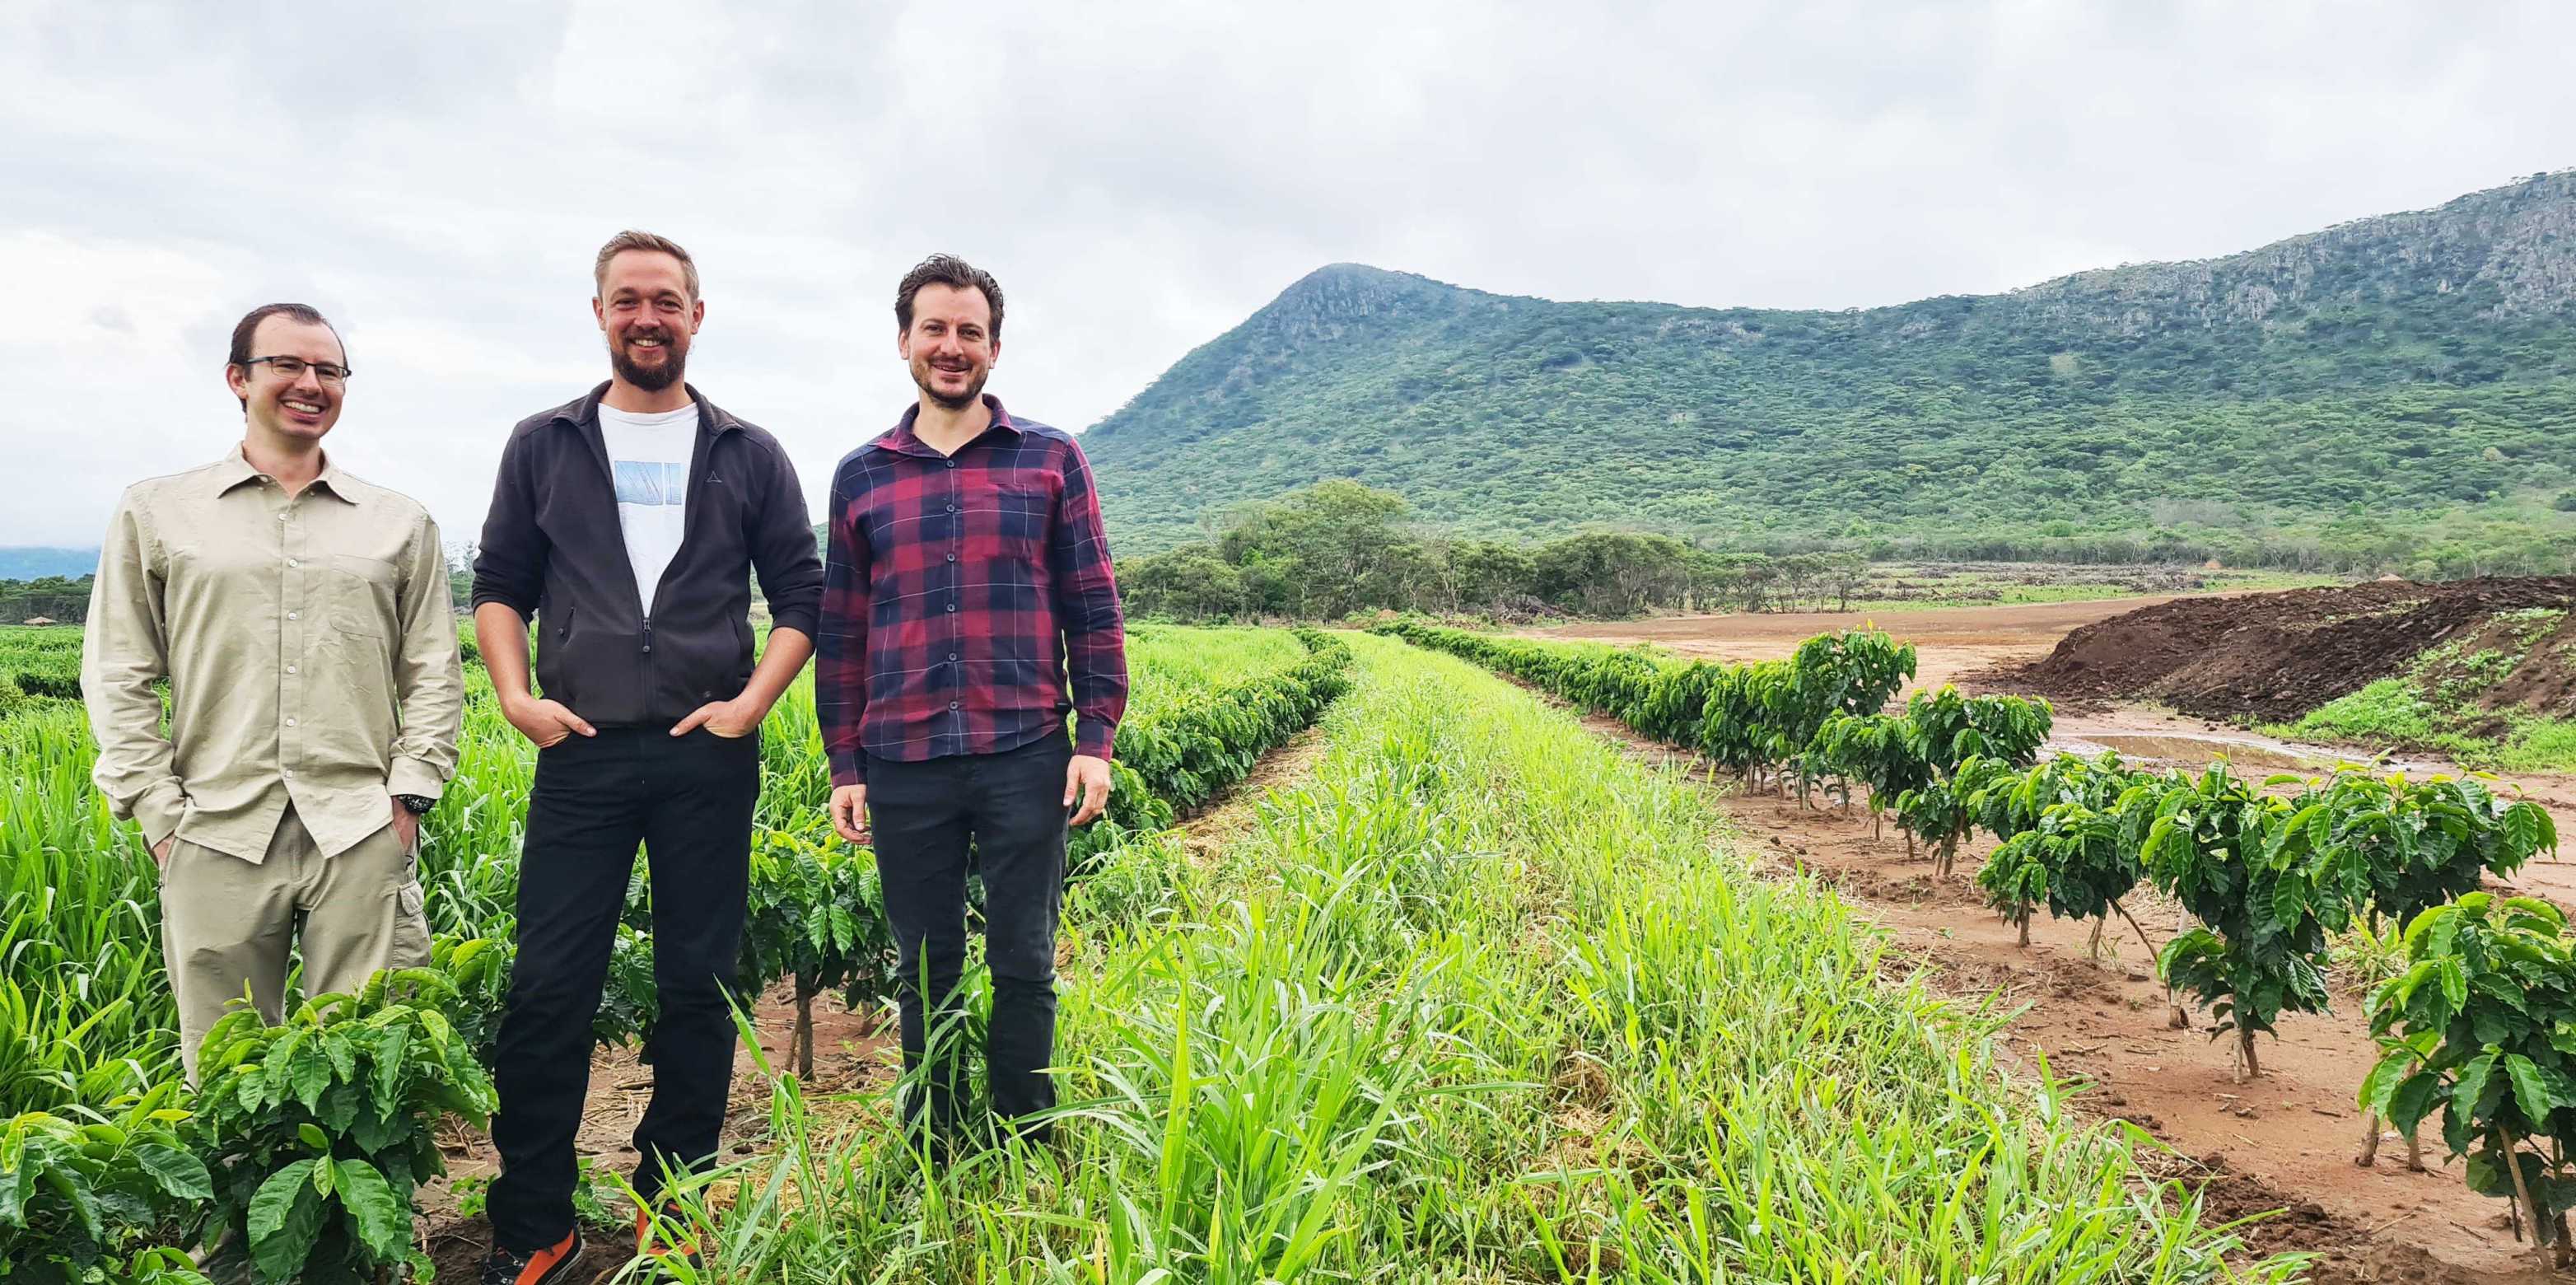 From left to right: Yanik Costa, Fridolin Stocker and Luca Costa on their coffee farm beneath Mount Sunzu in Northern Sambia. Photo: Fridolin Stocker / Mount Sunzu Coffee